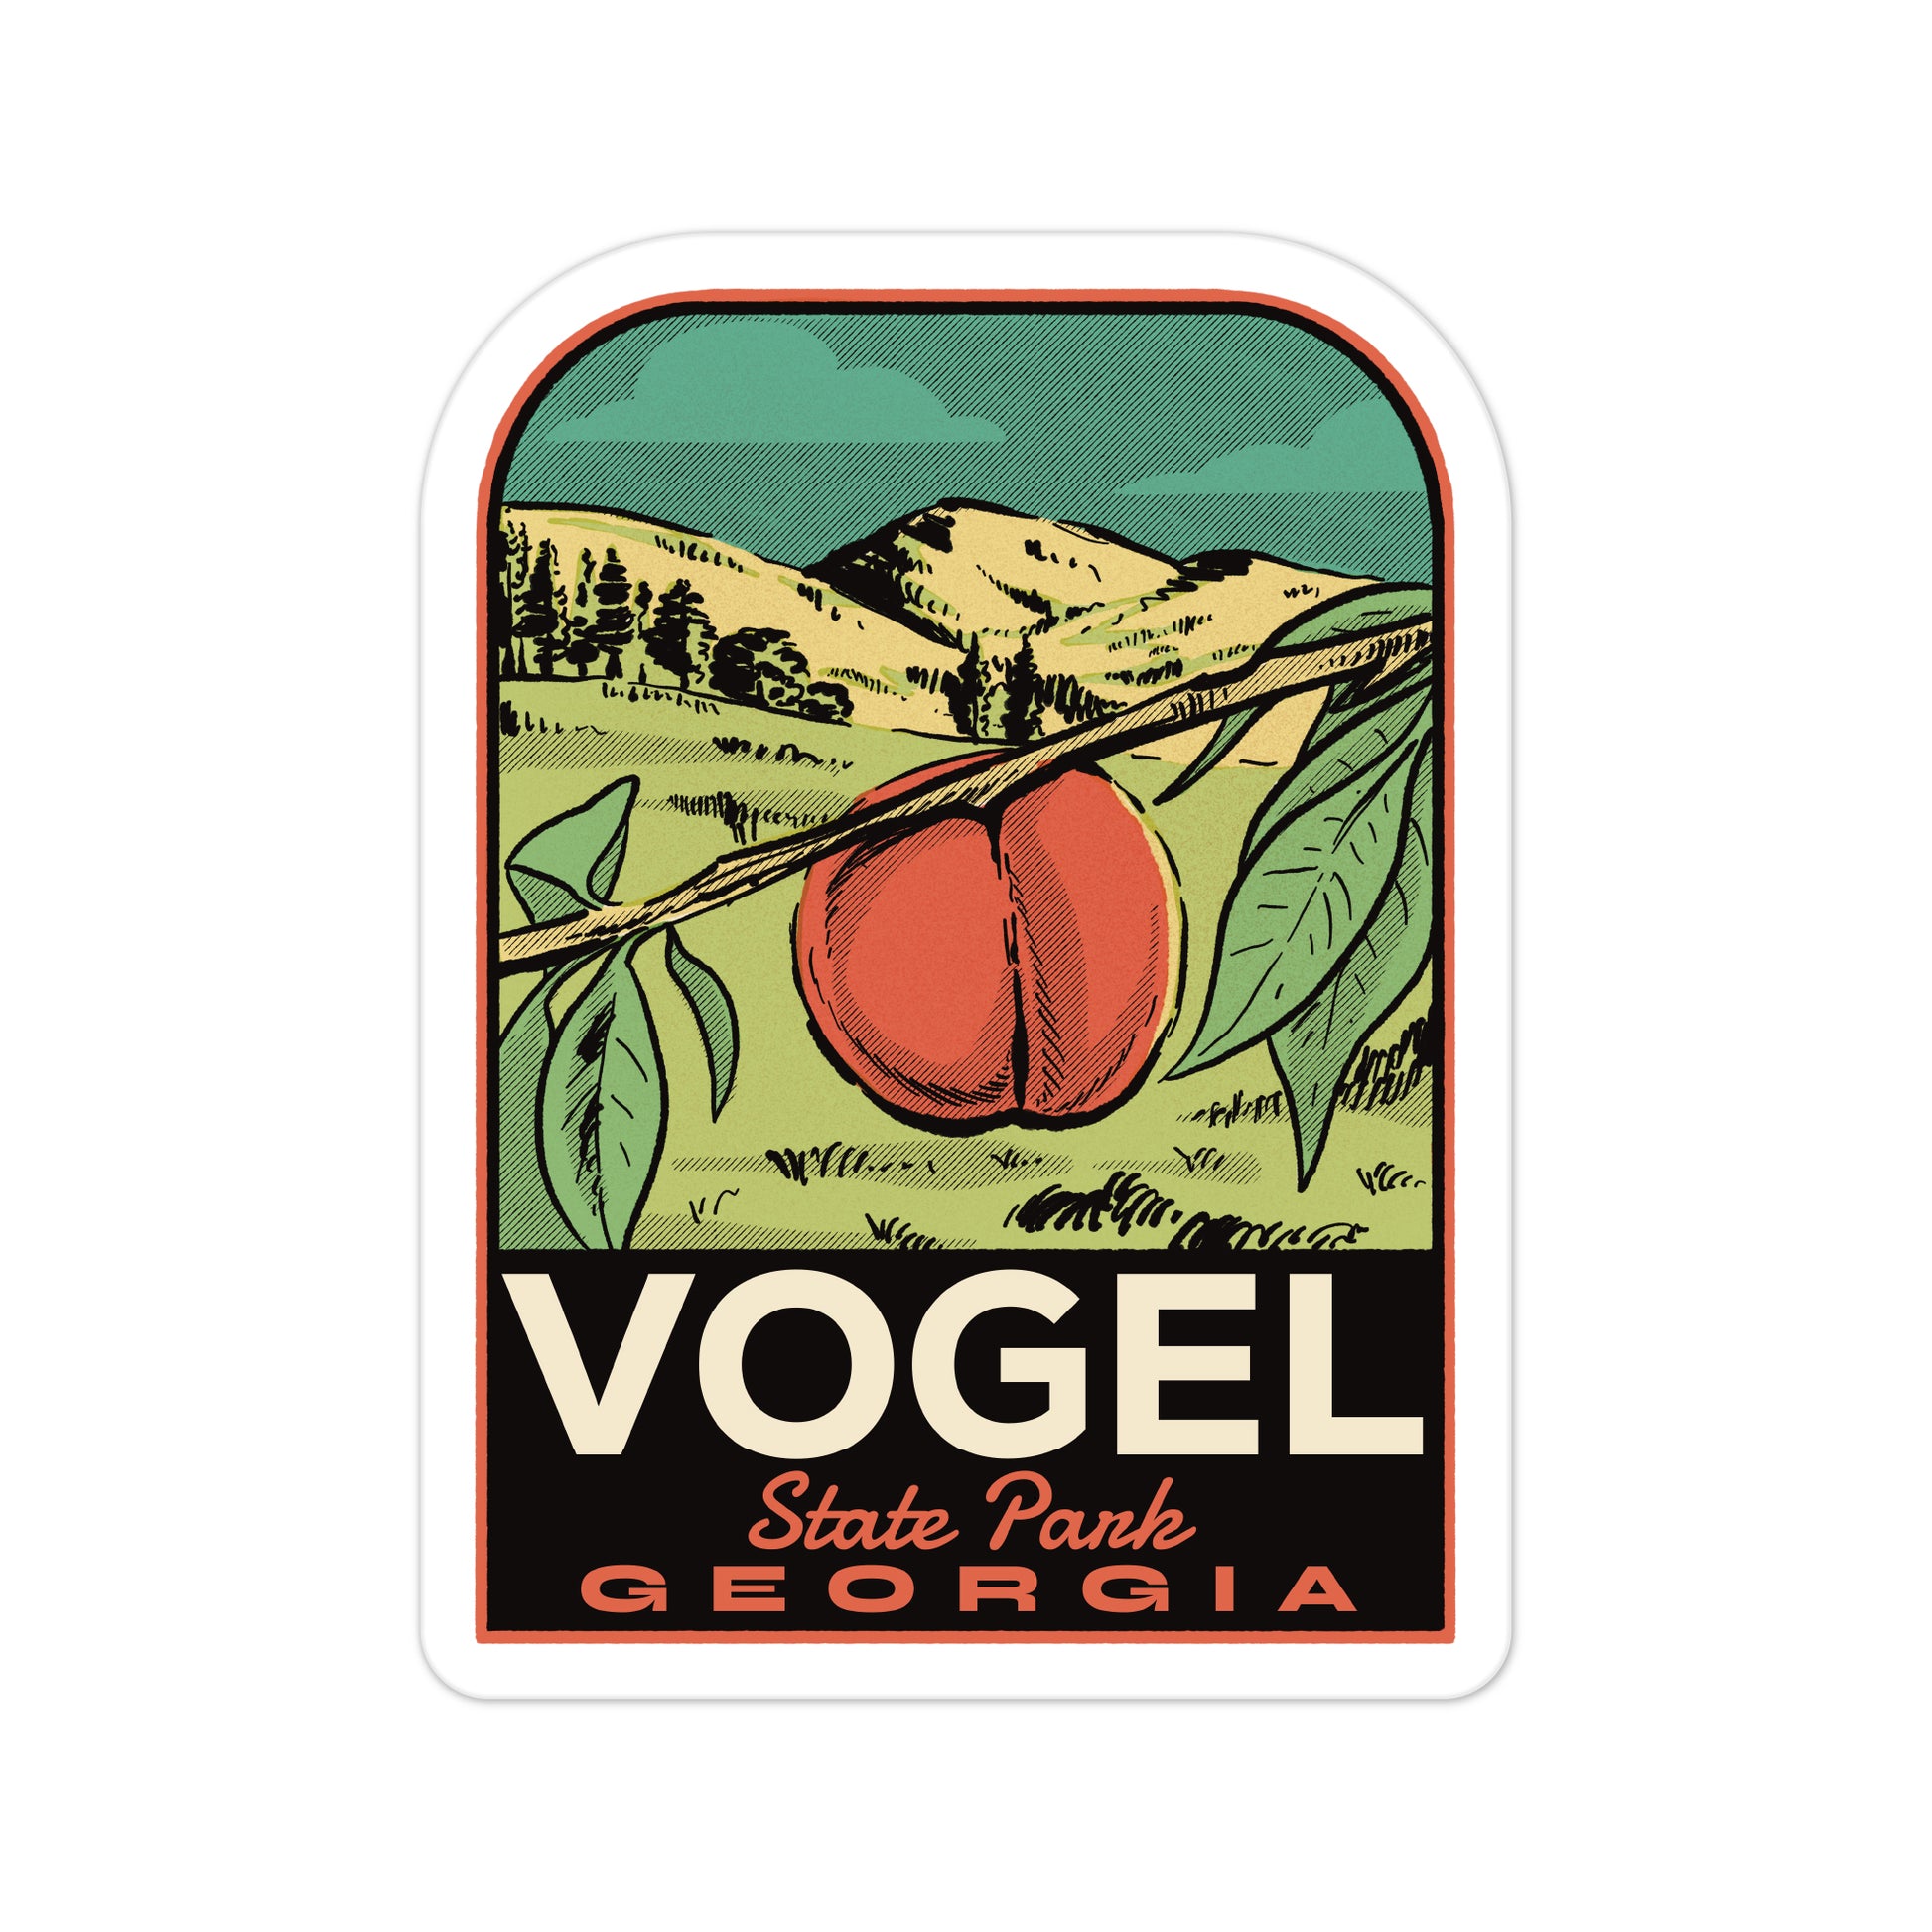 A sticker of Vogel State Park